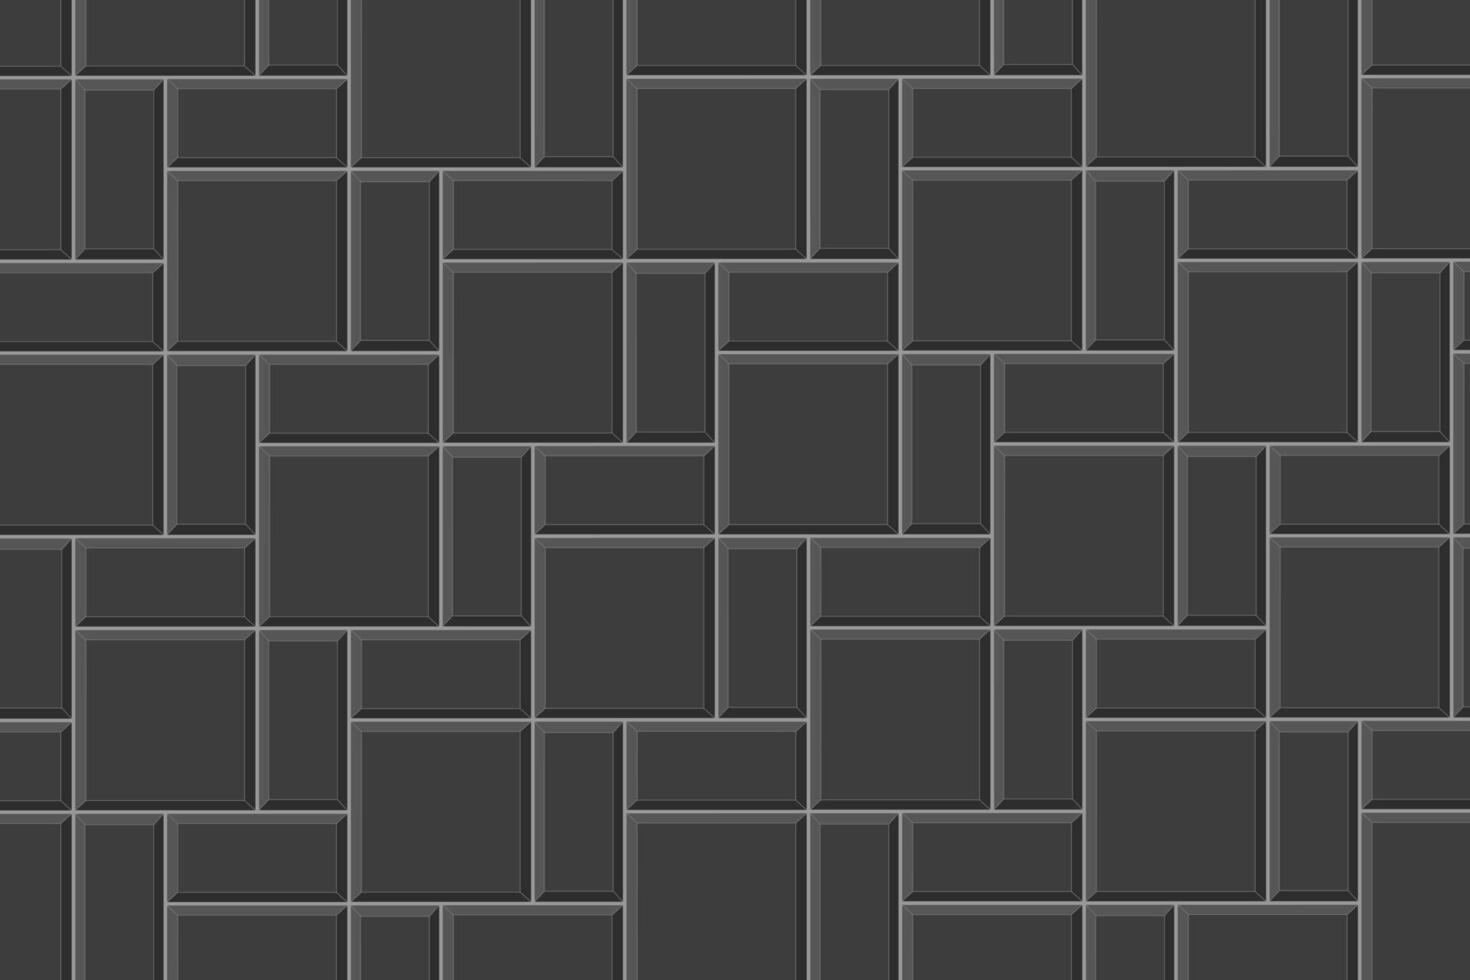 Black brickweave tile background. Stone or ceramic brick wall. Kitchen backsplash texture. Shower, bathroom or toilet floor mosaic decoration. Sidewalk surface vector